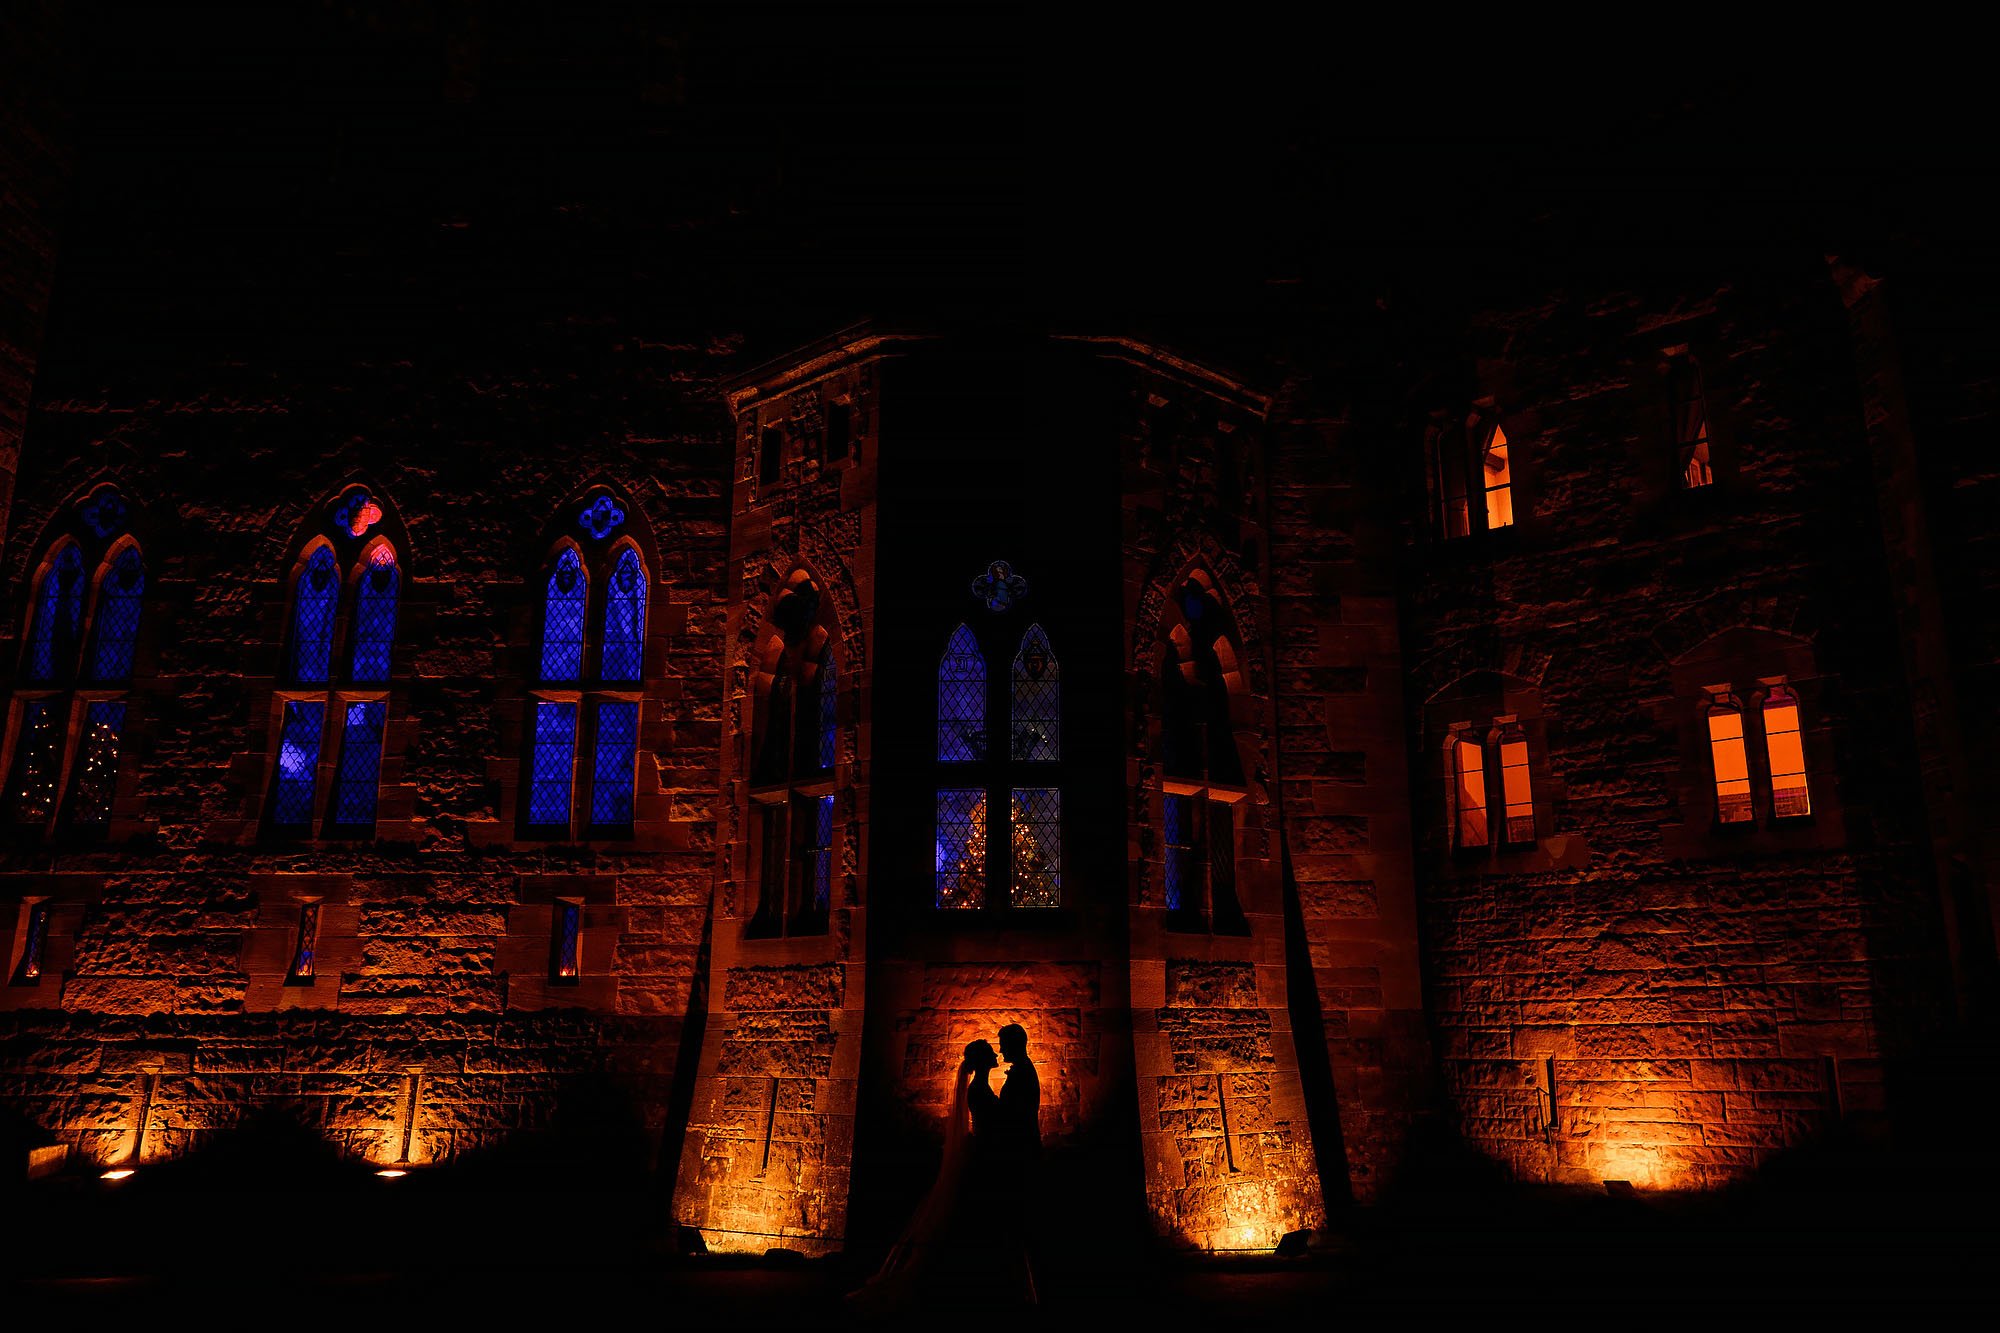 Winter wedding at peckforton castle cheshire - arj photography®